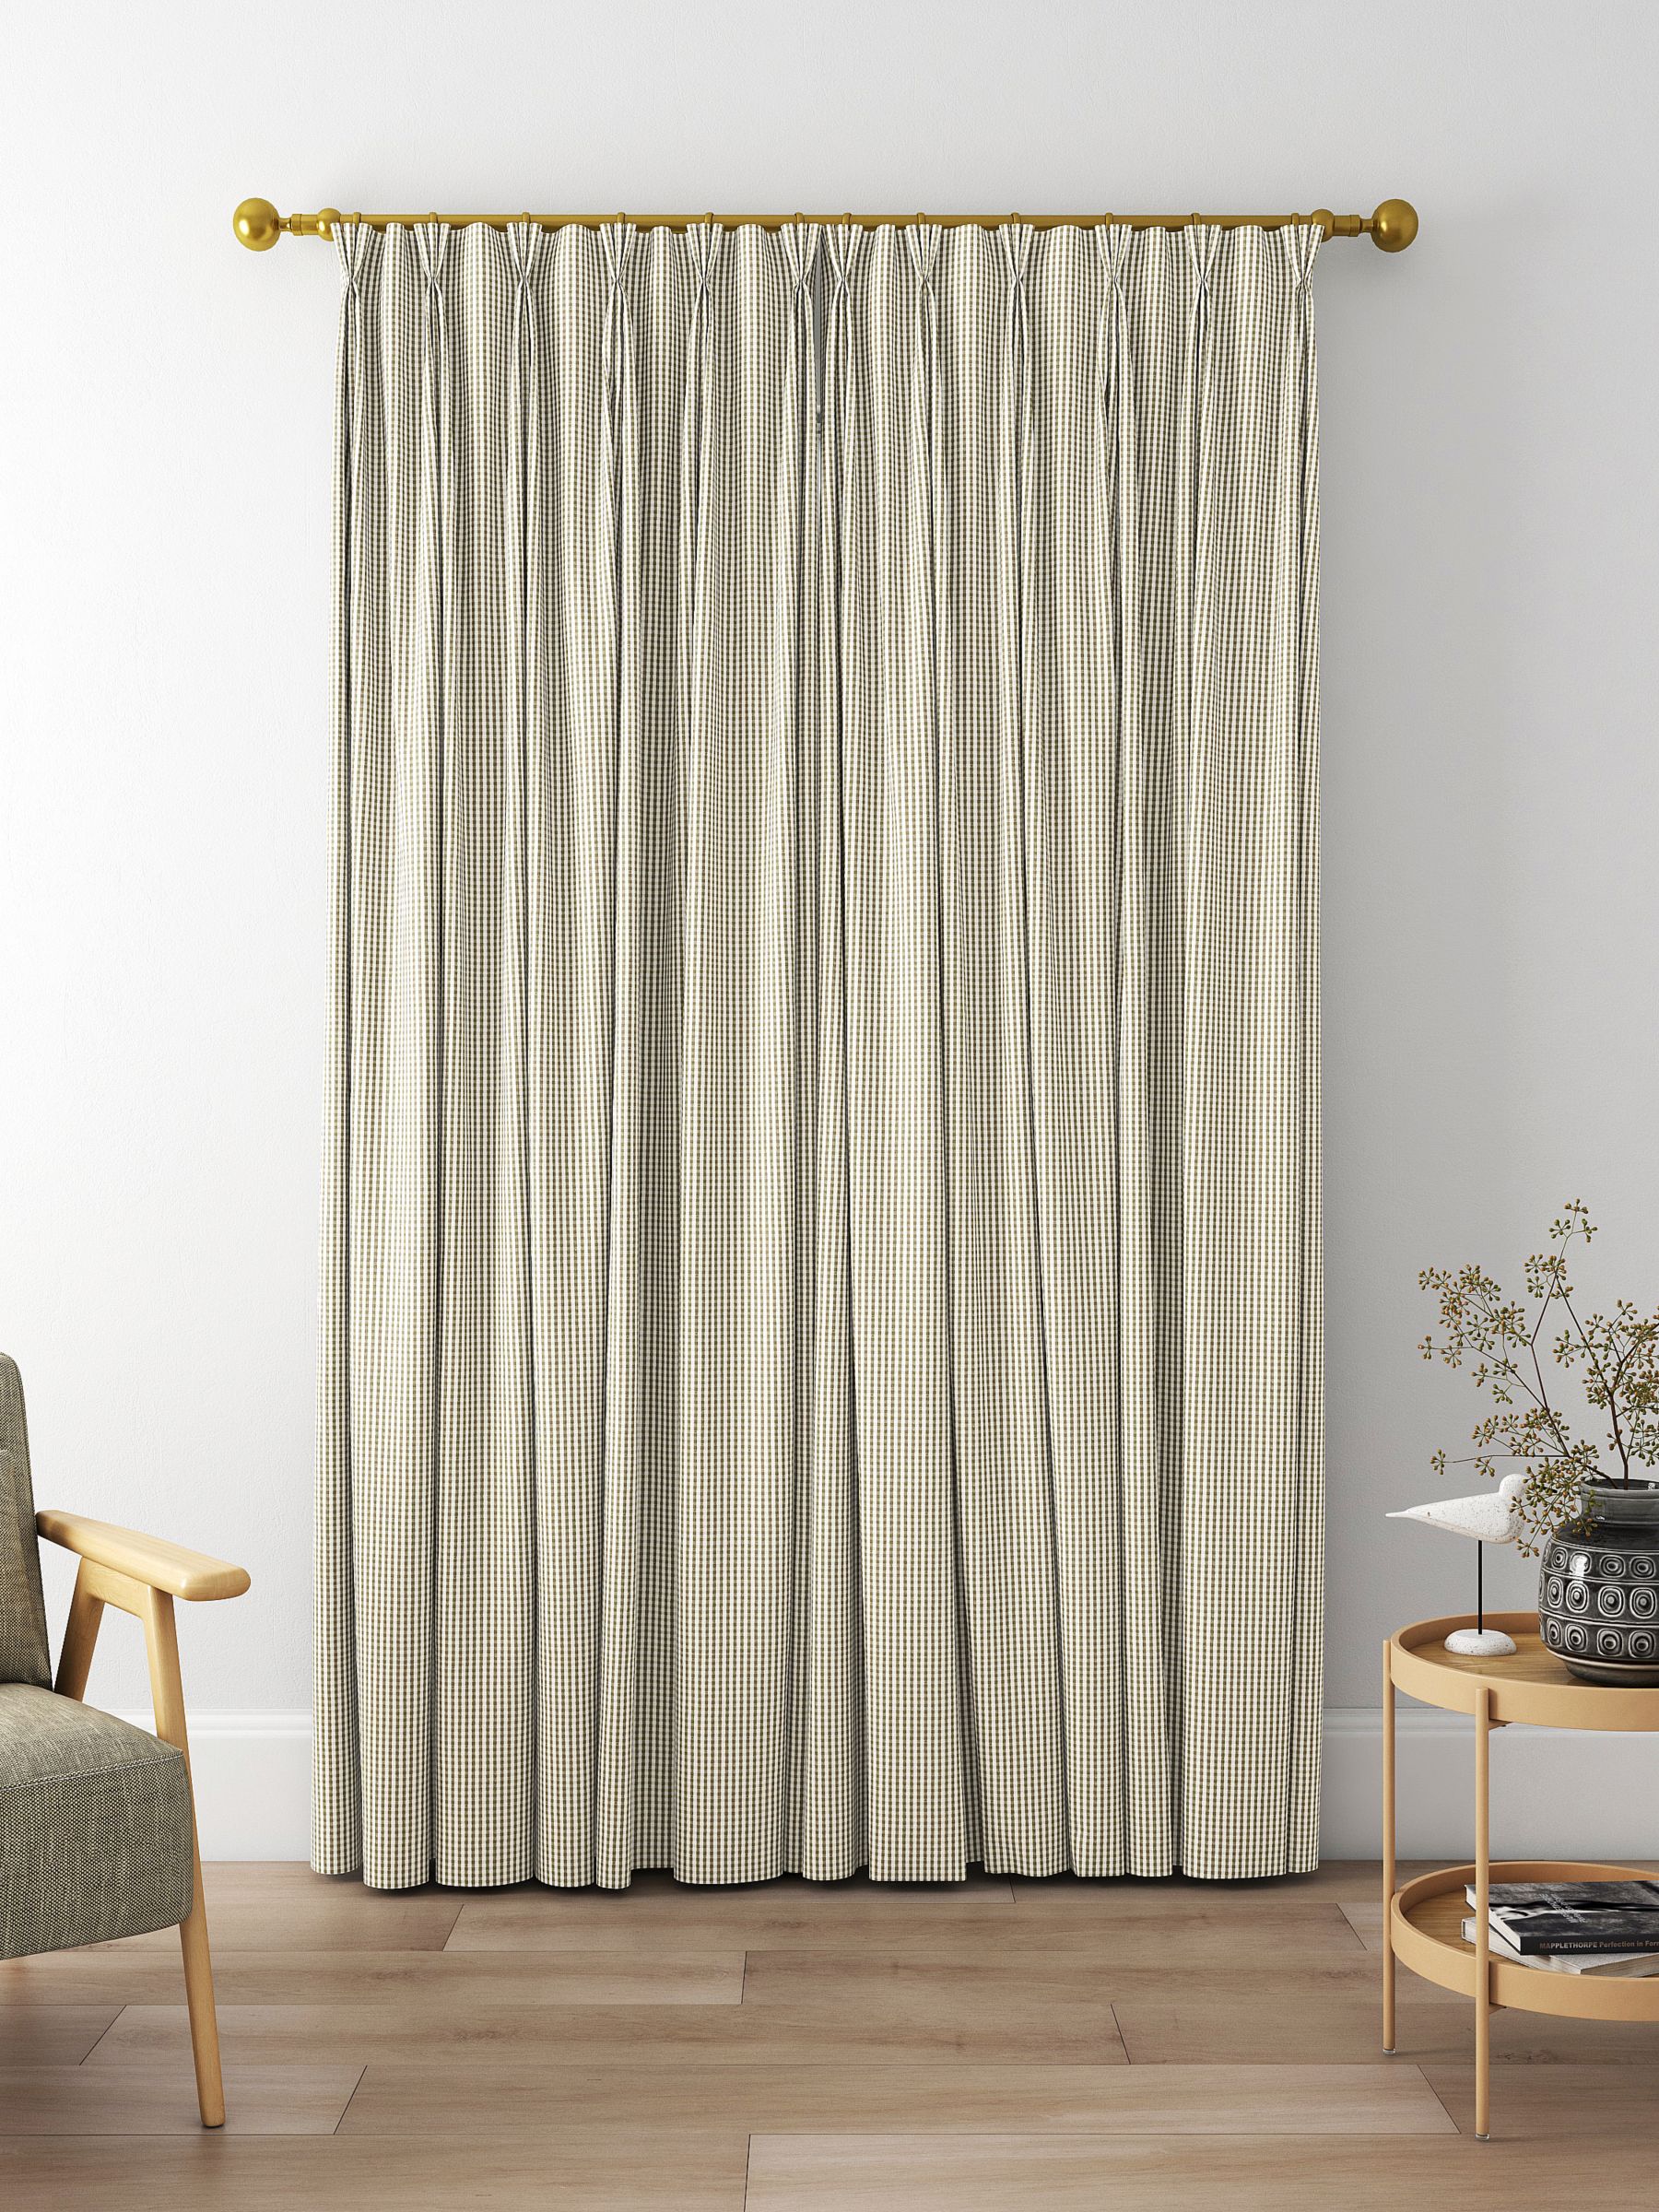 Clarke & Clarke Windsor Made to Measure Curtains, Linen